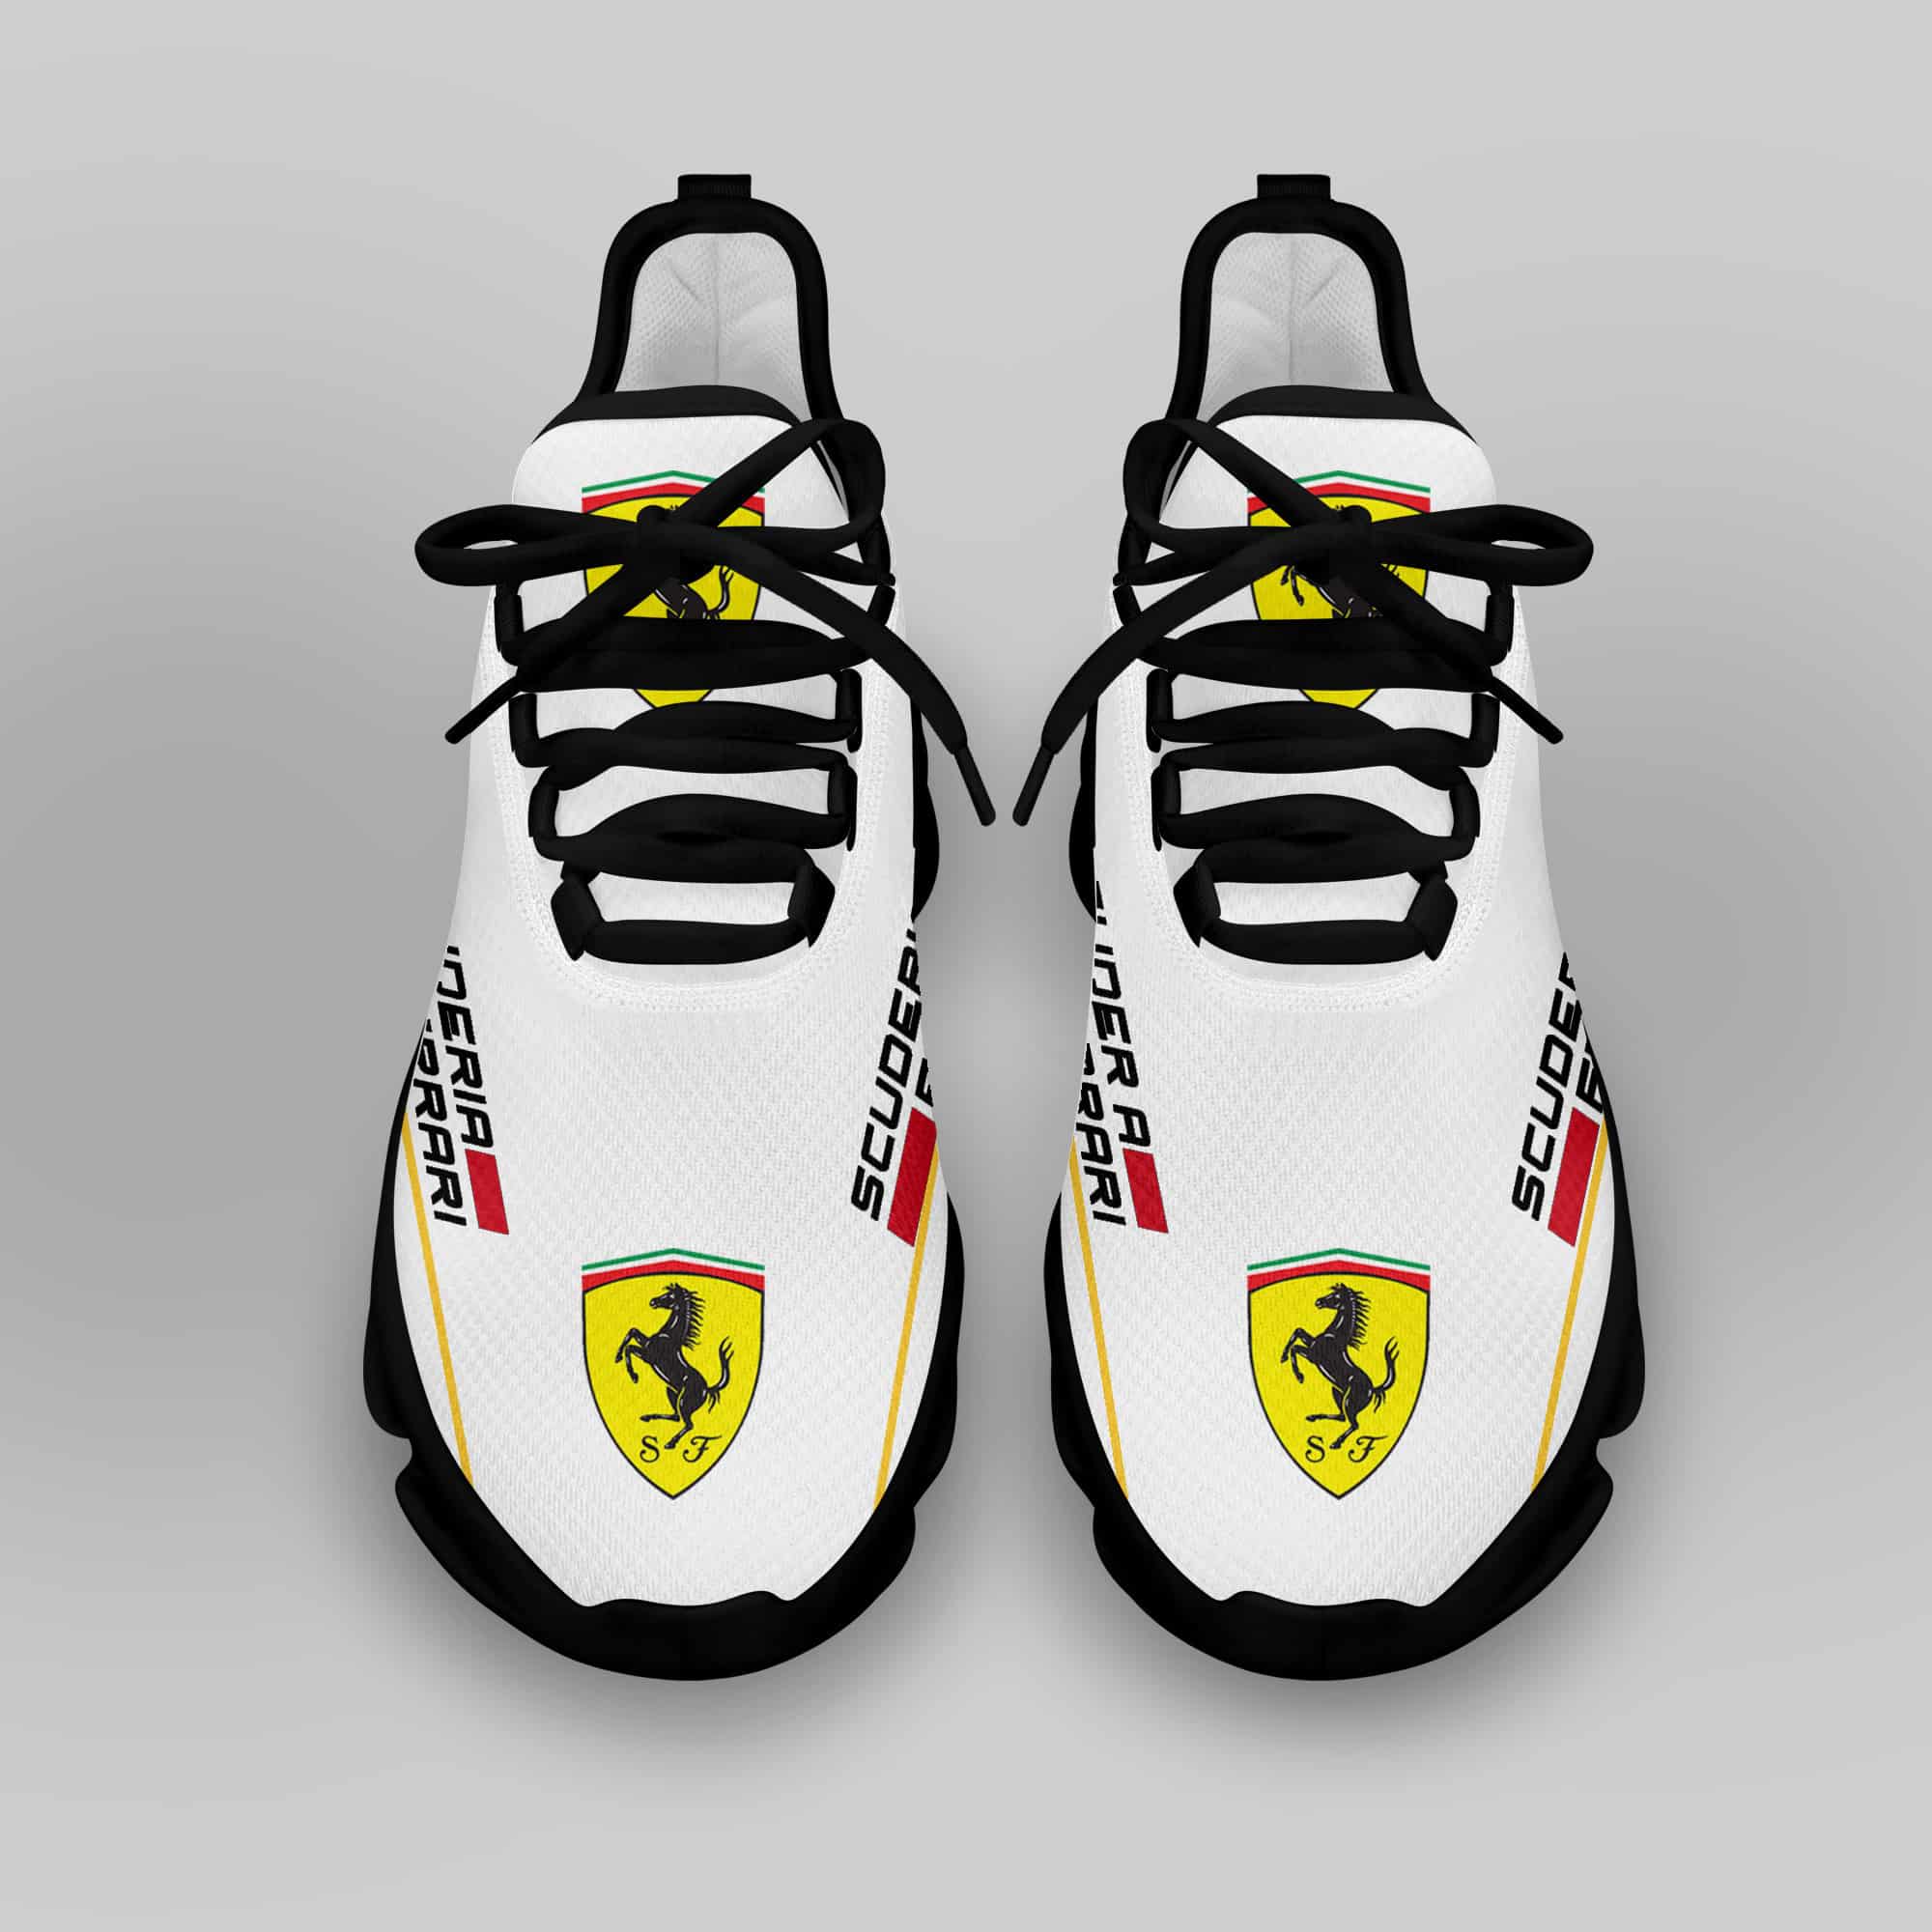 Ferrari Sneaker Running Shoes Max Soul Shoes Sneakers Ver 34 4